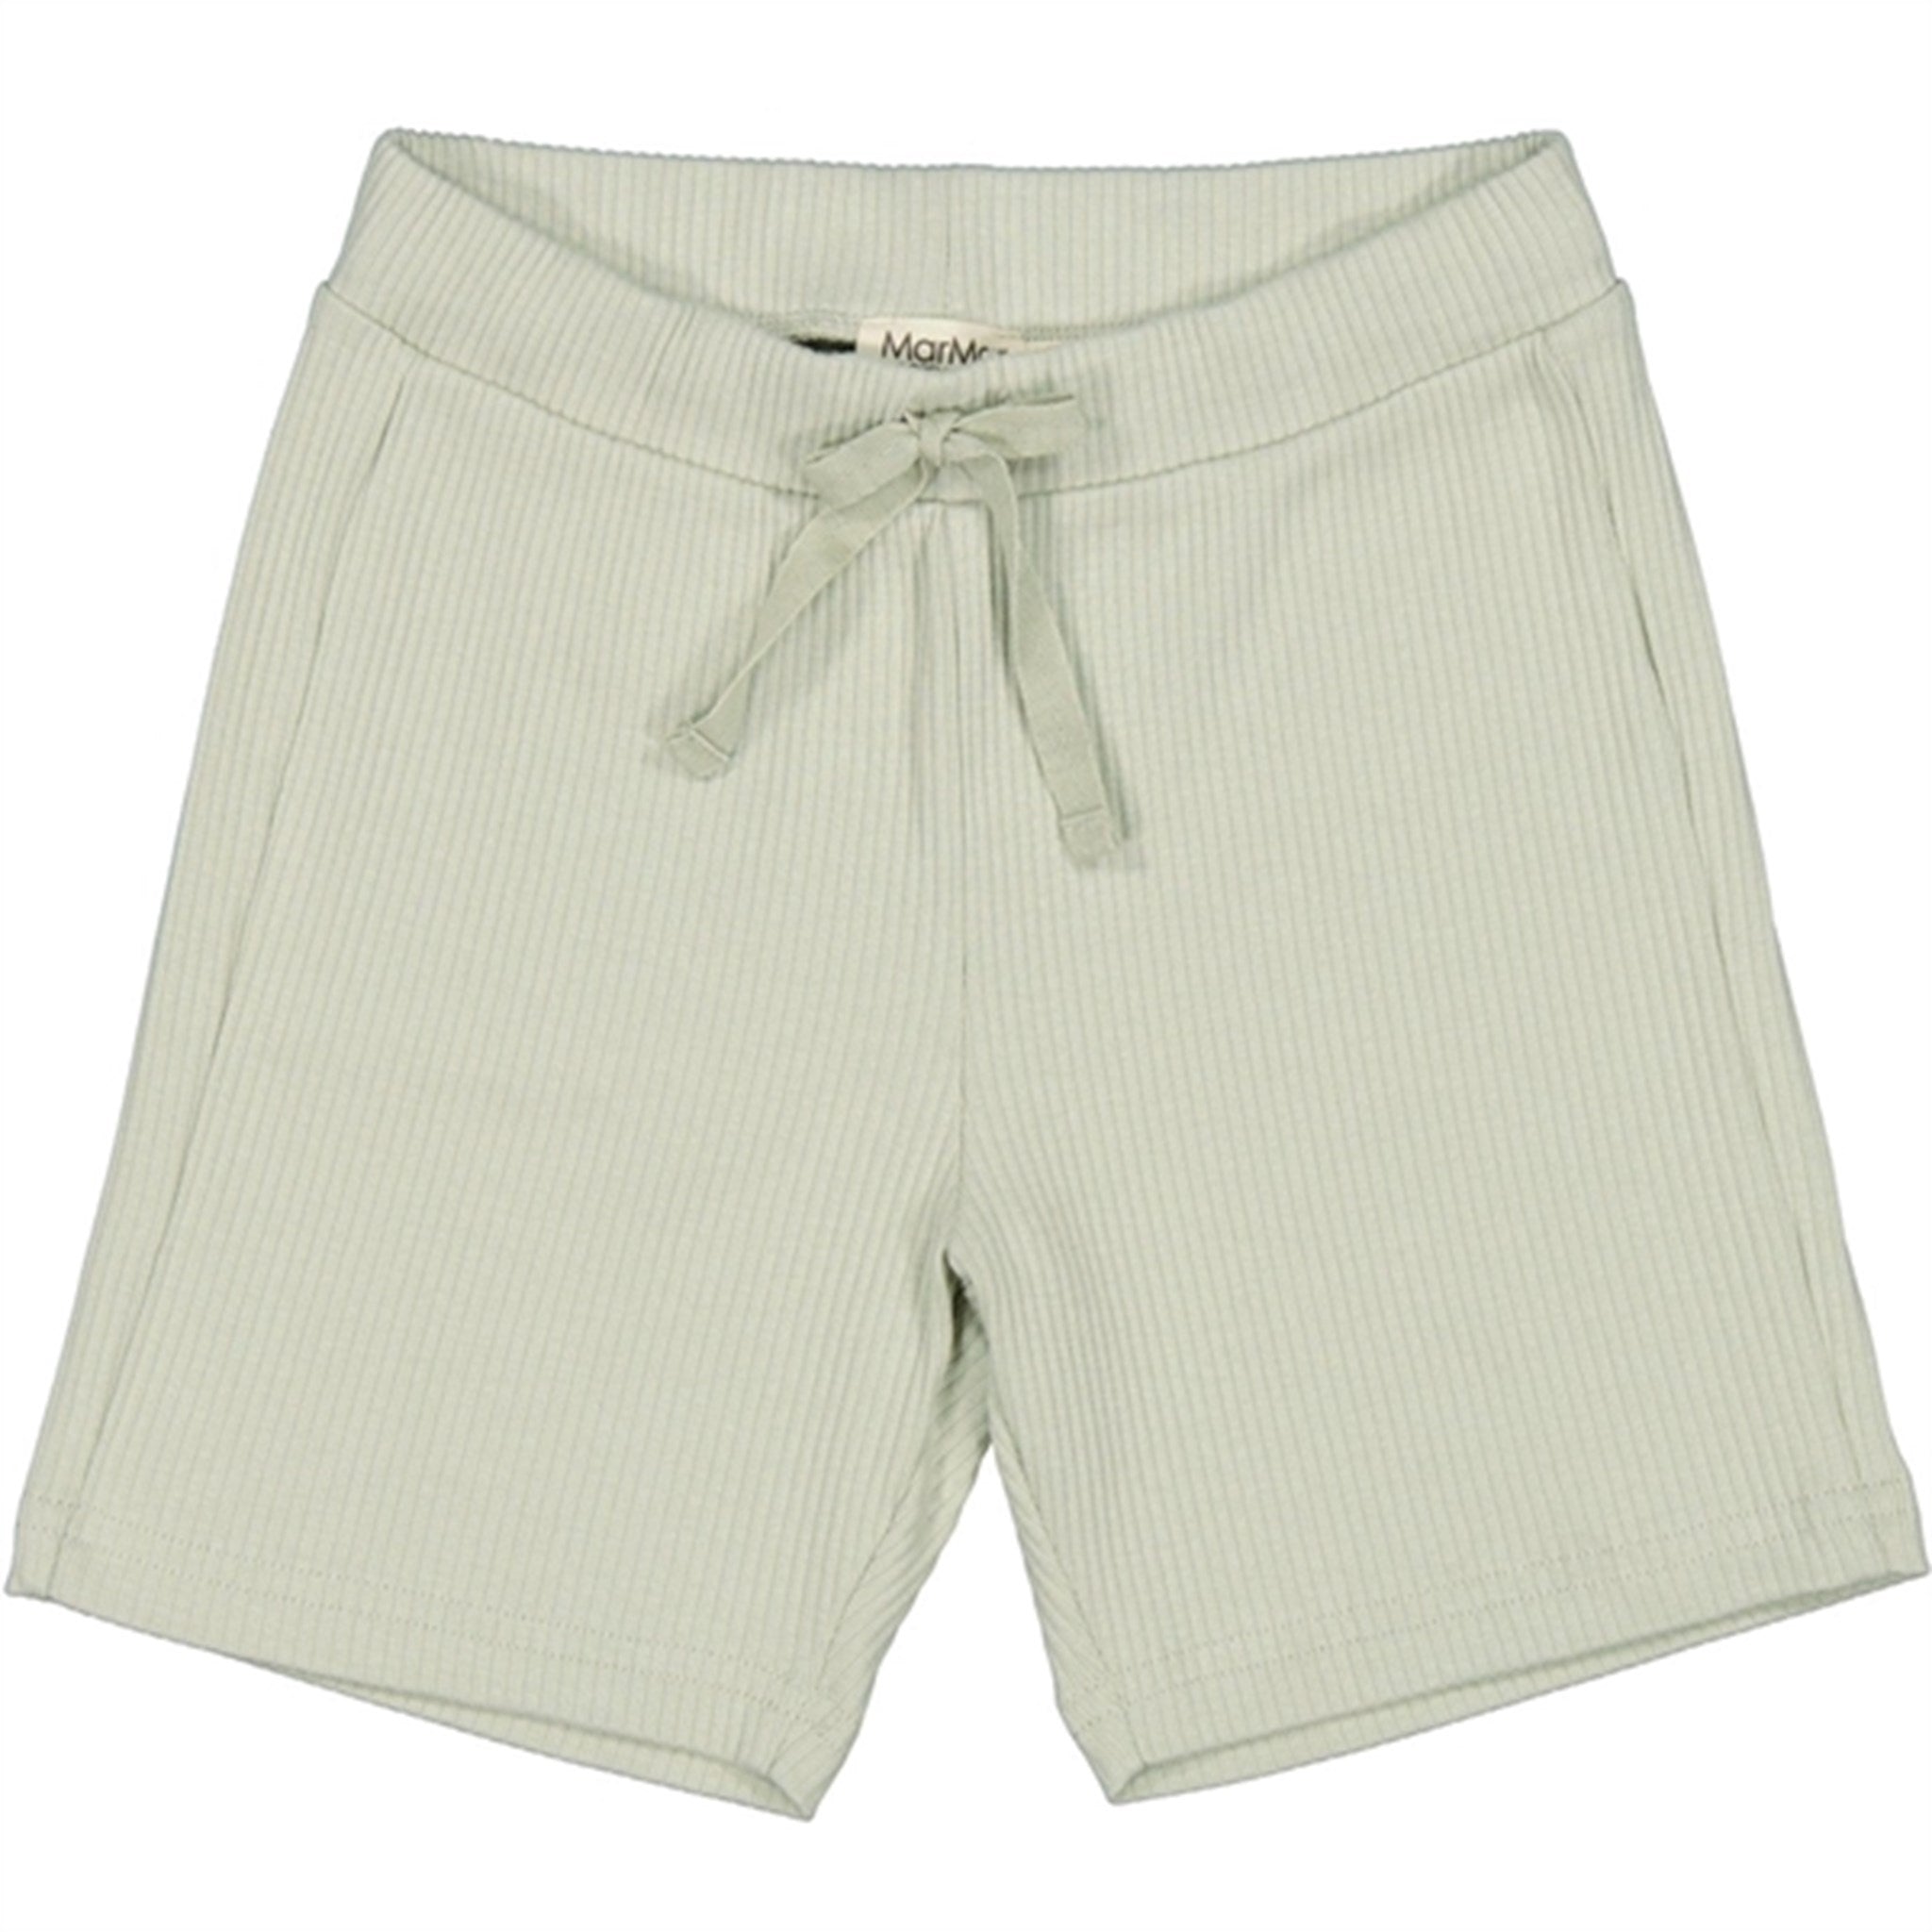 MarMar Modal White Sage Shorts